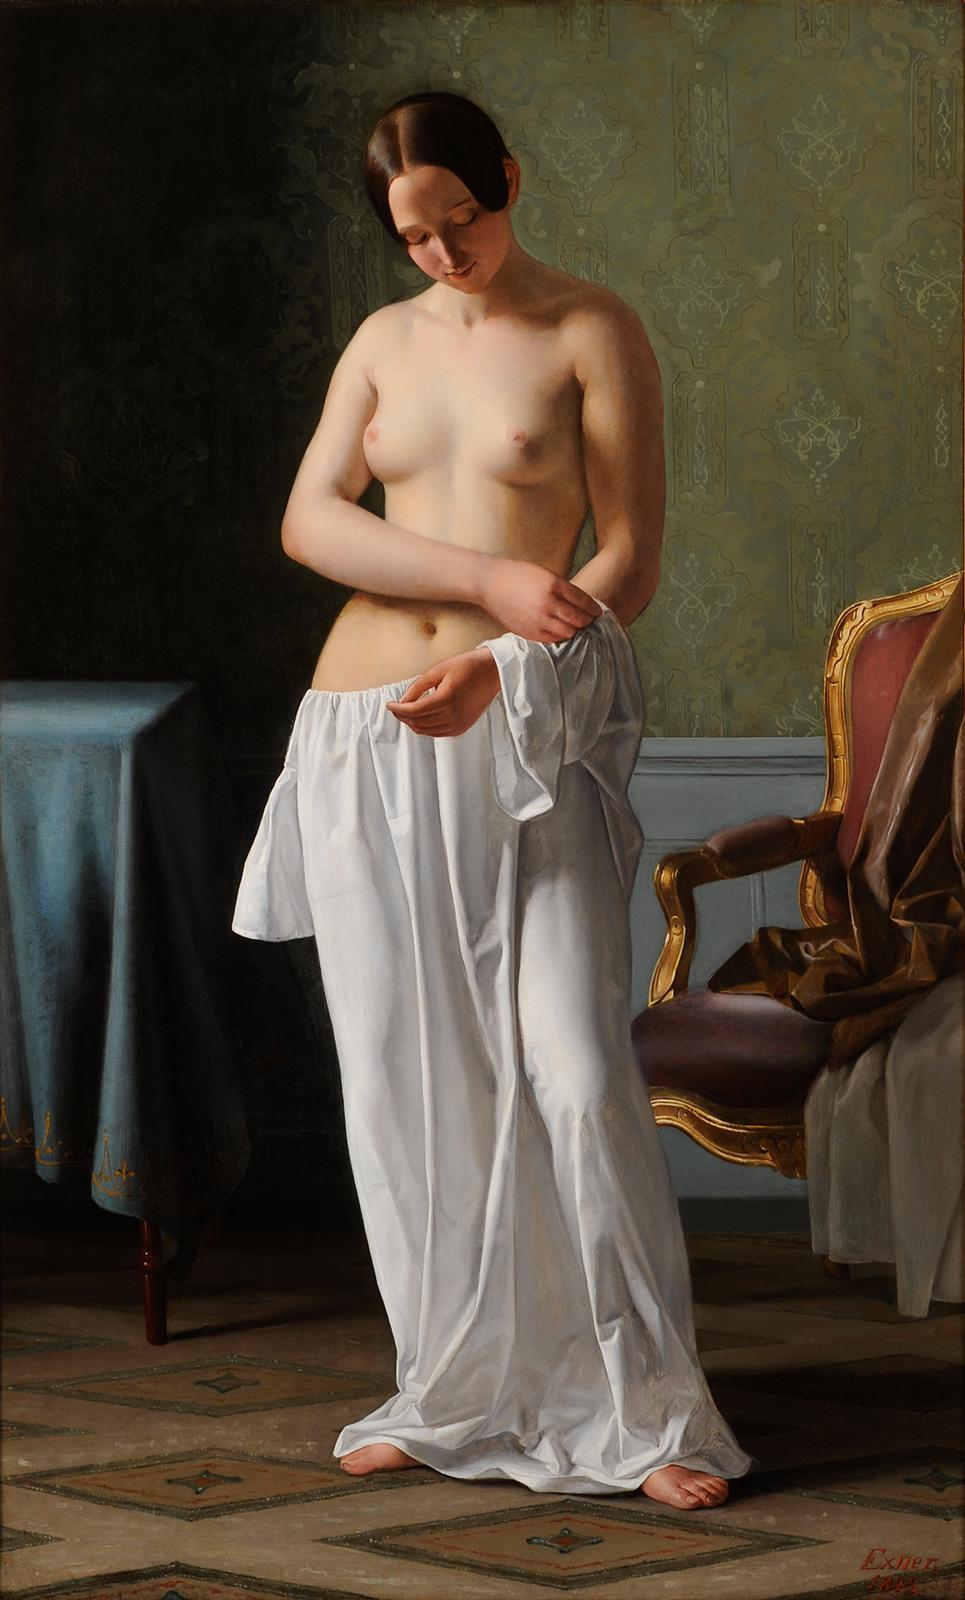 Julius Exner Nude Painting – Modell zieht sich aus